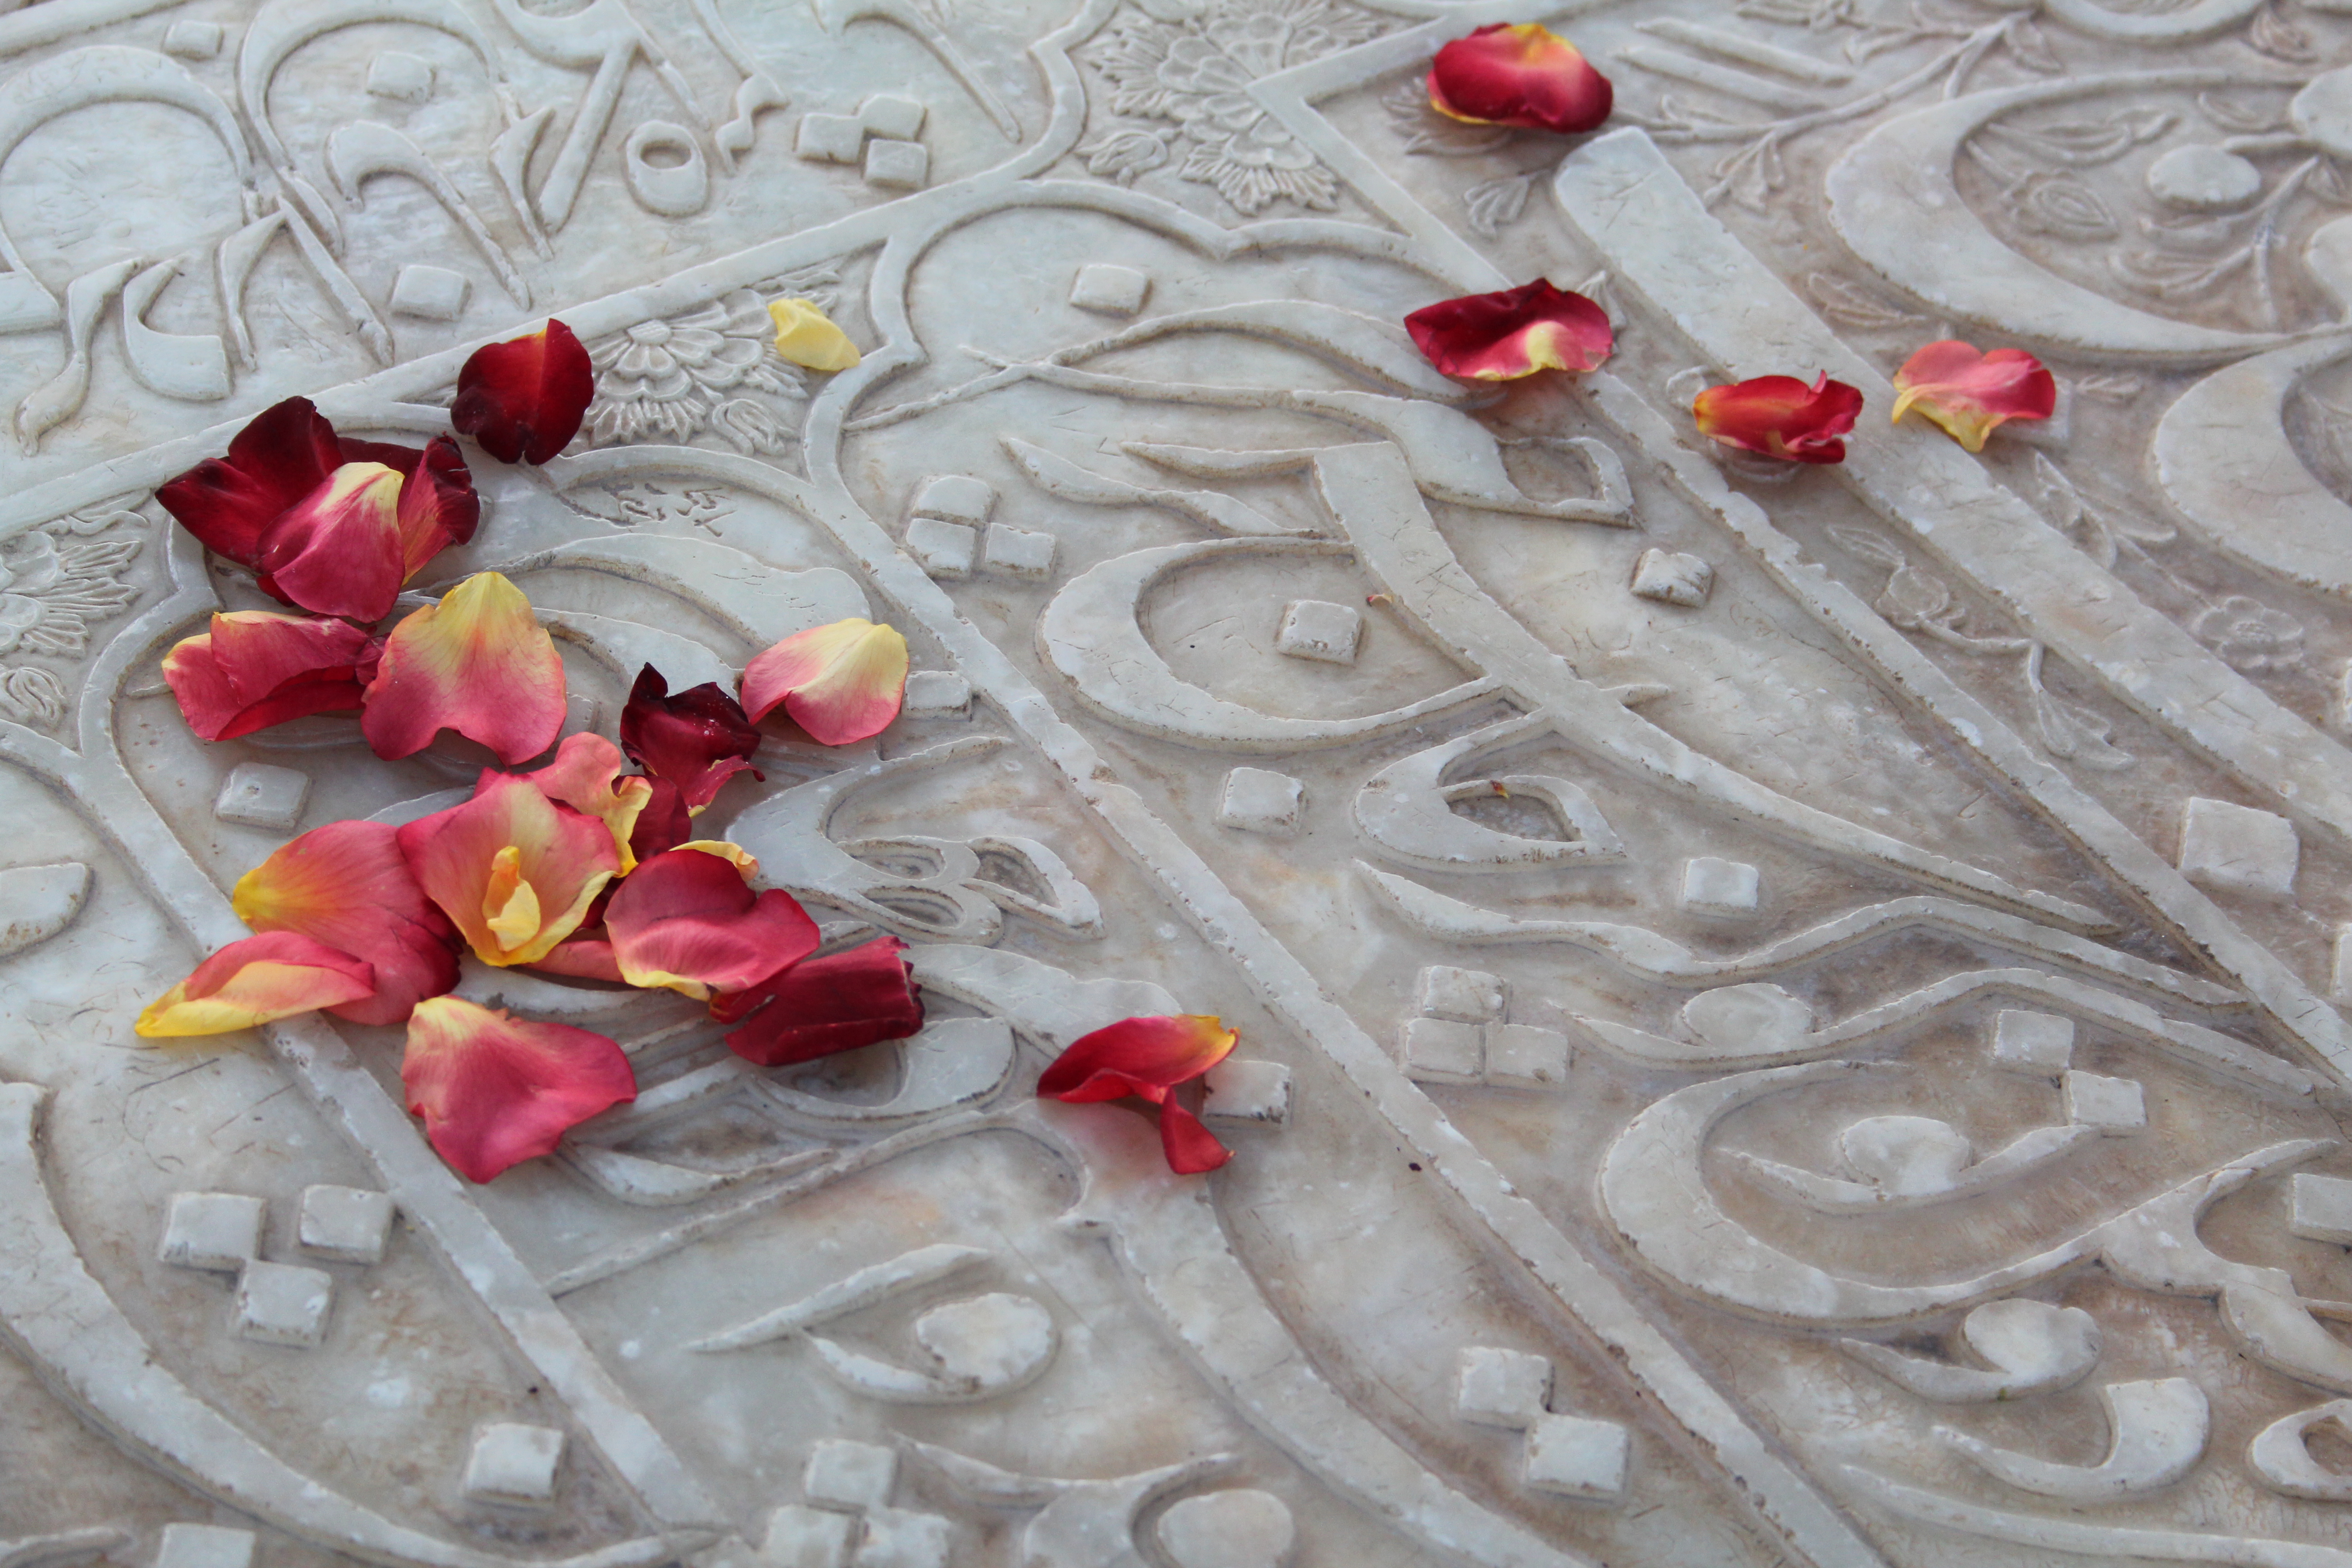 Rose petals strewn by a pilgrim on Hafez' marble gravestone (photo: Marian Brehmer)